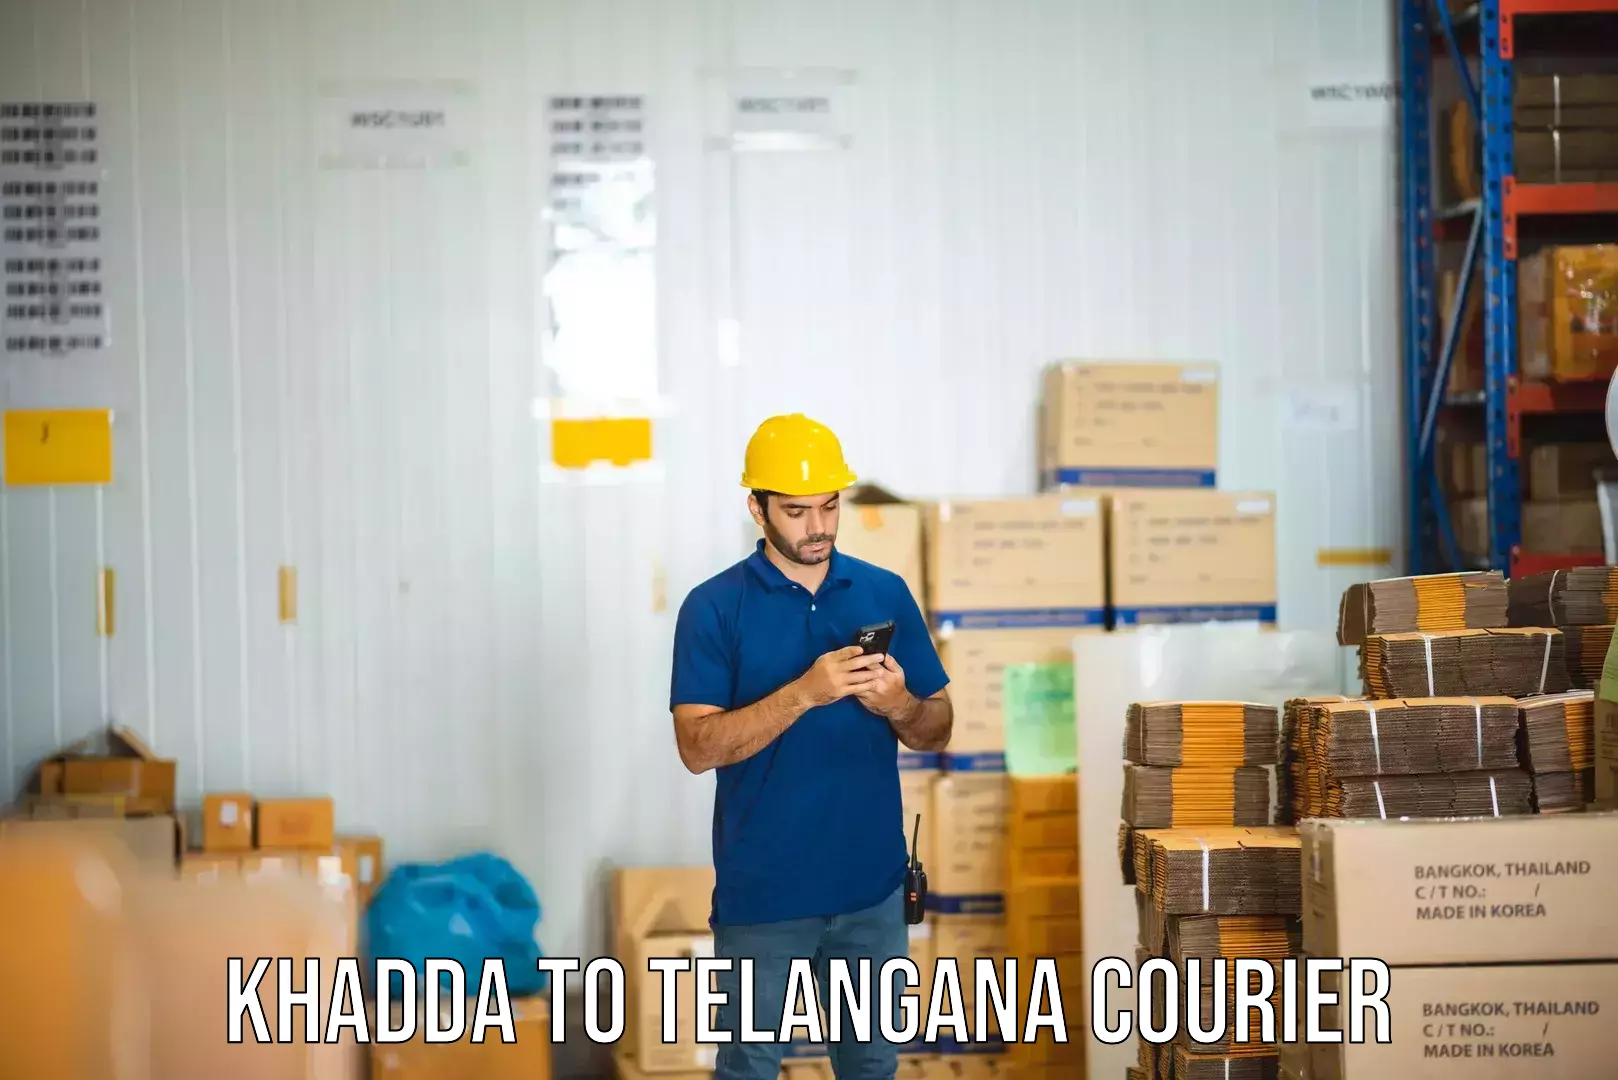 Global logistics network Khadda to Telangana